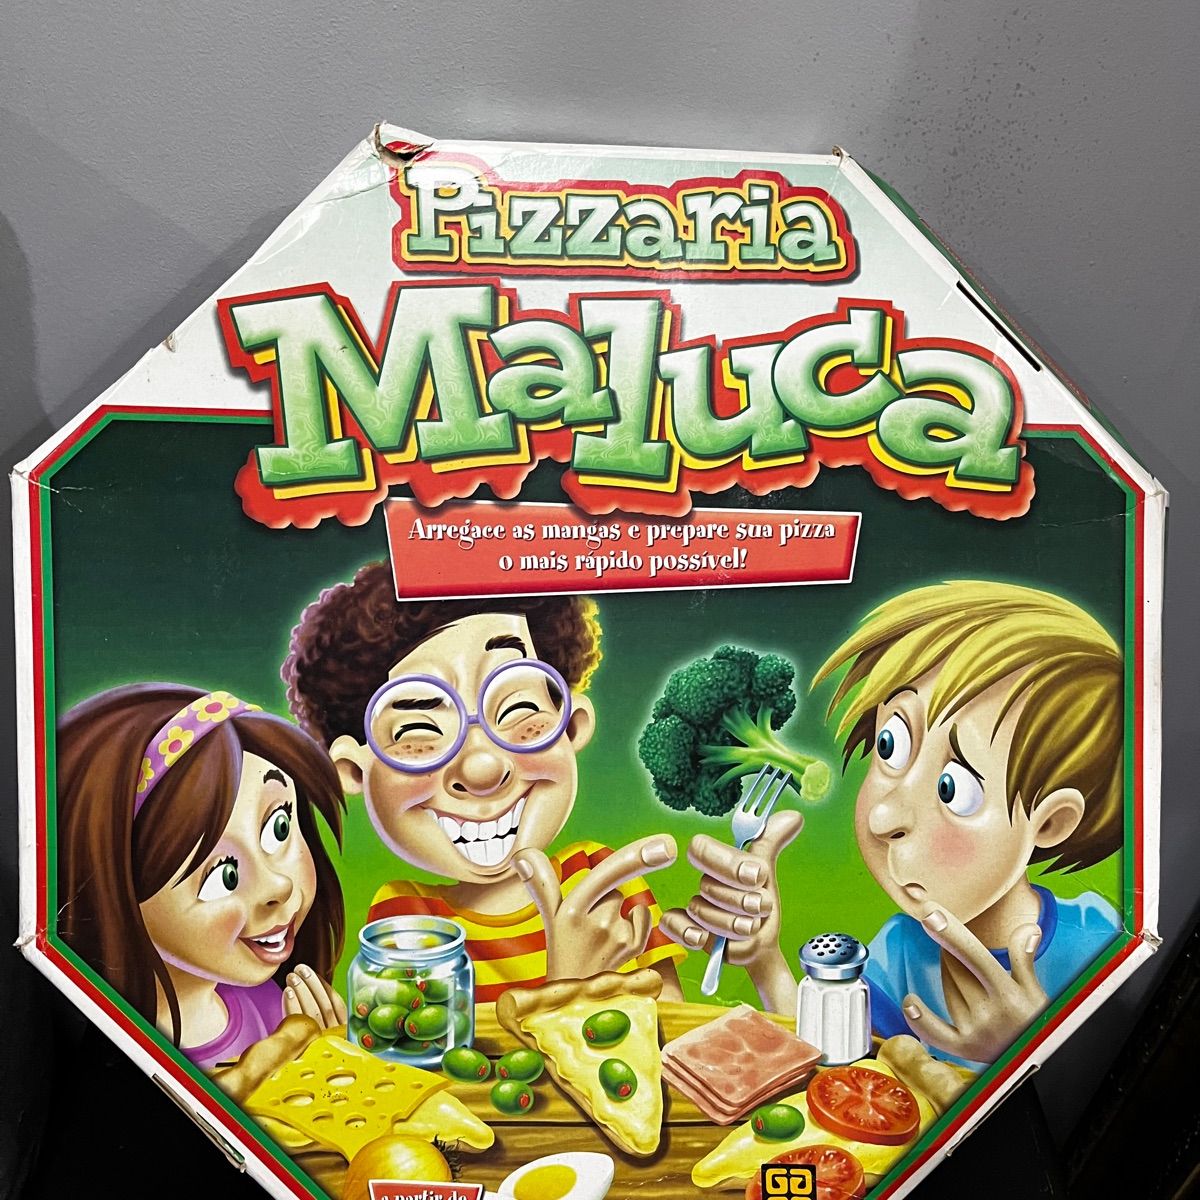 Jogo Pizzaria Maluca - Kiko Brinquedos